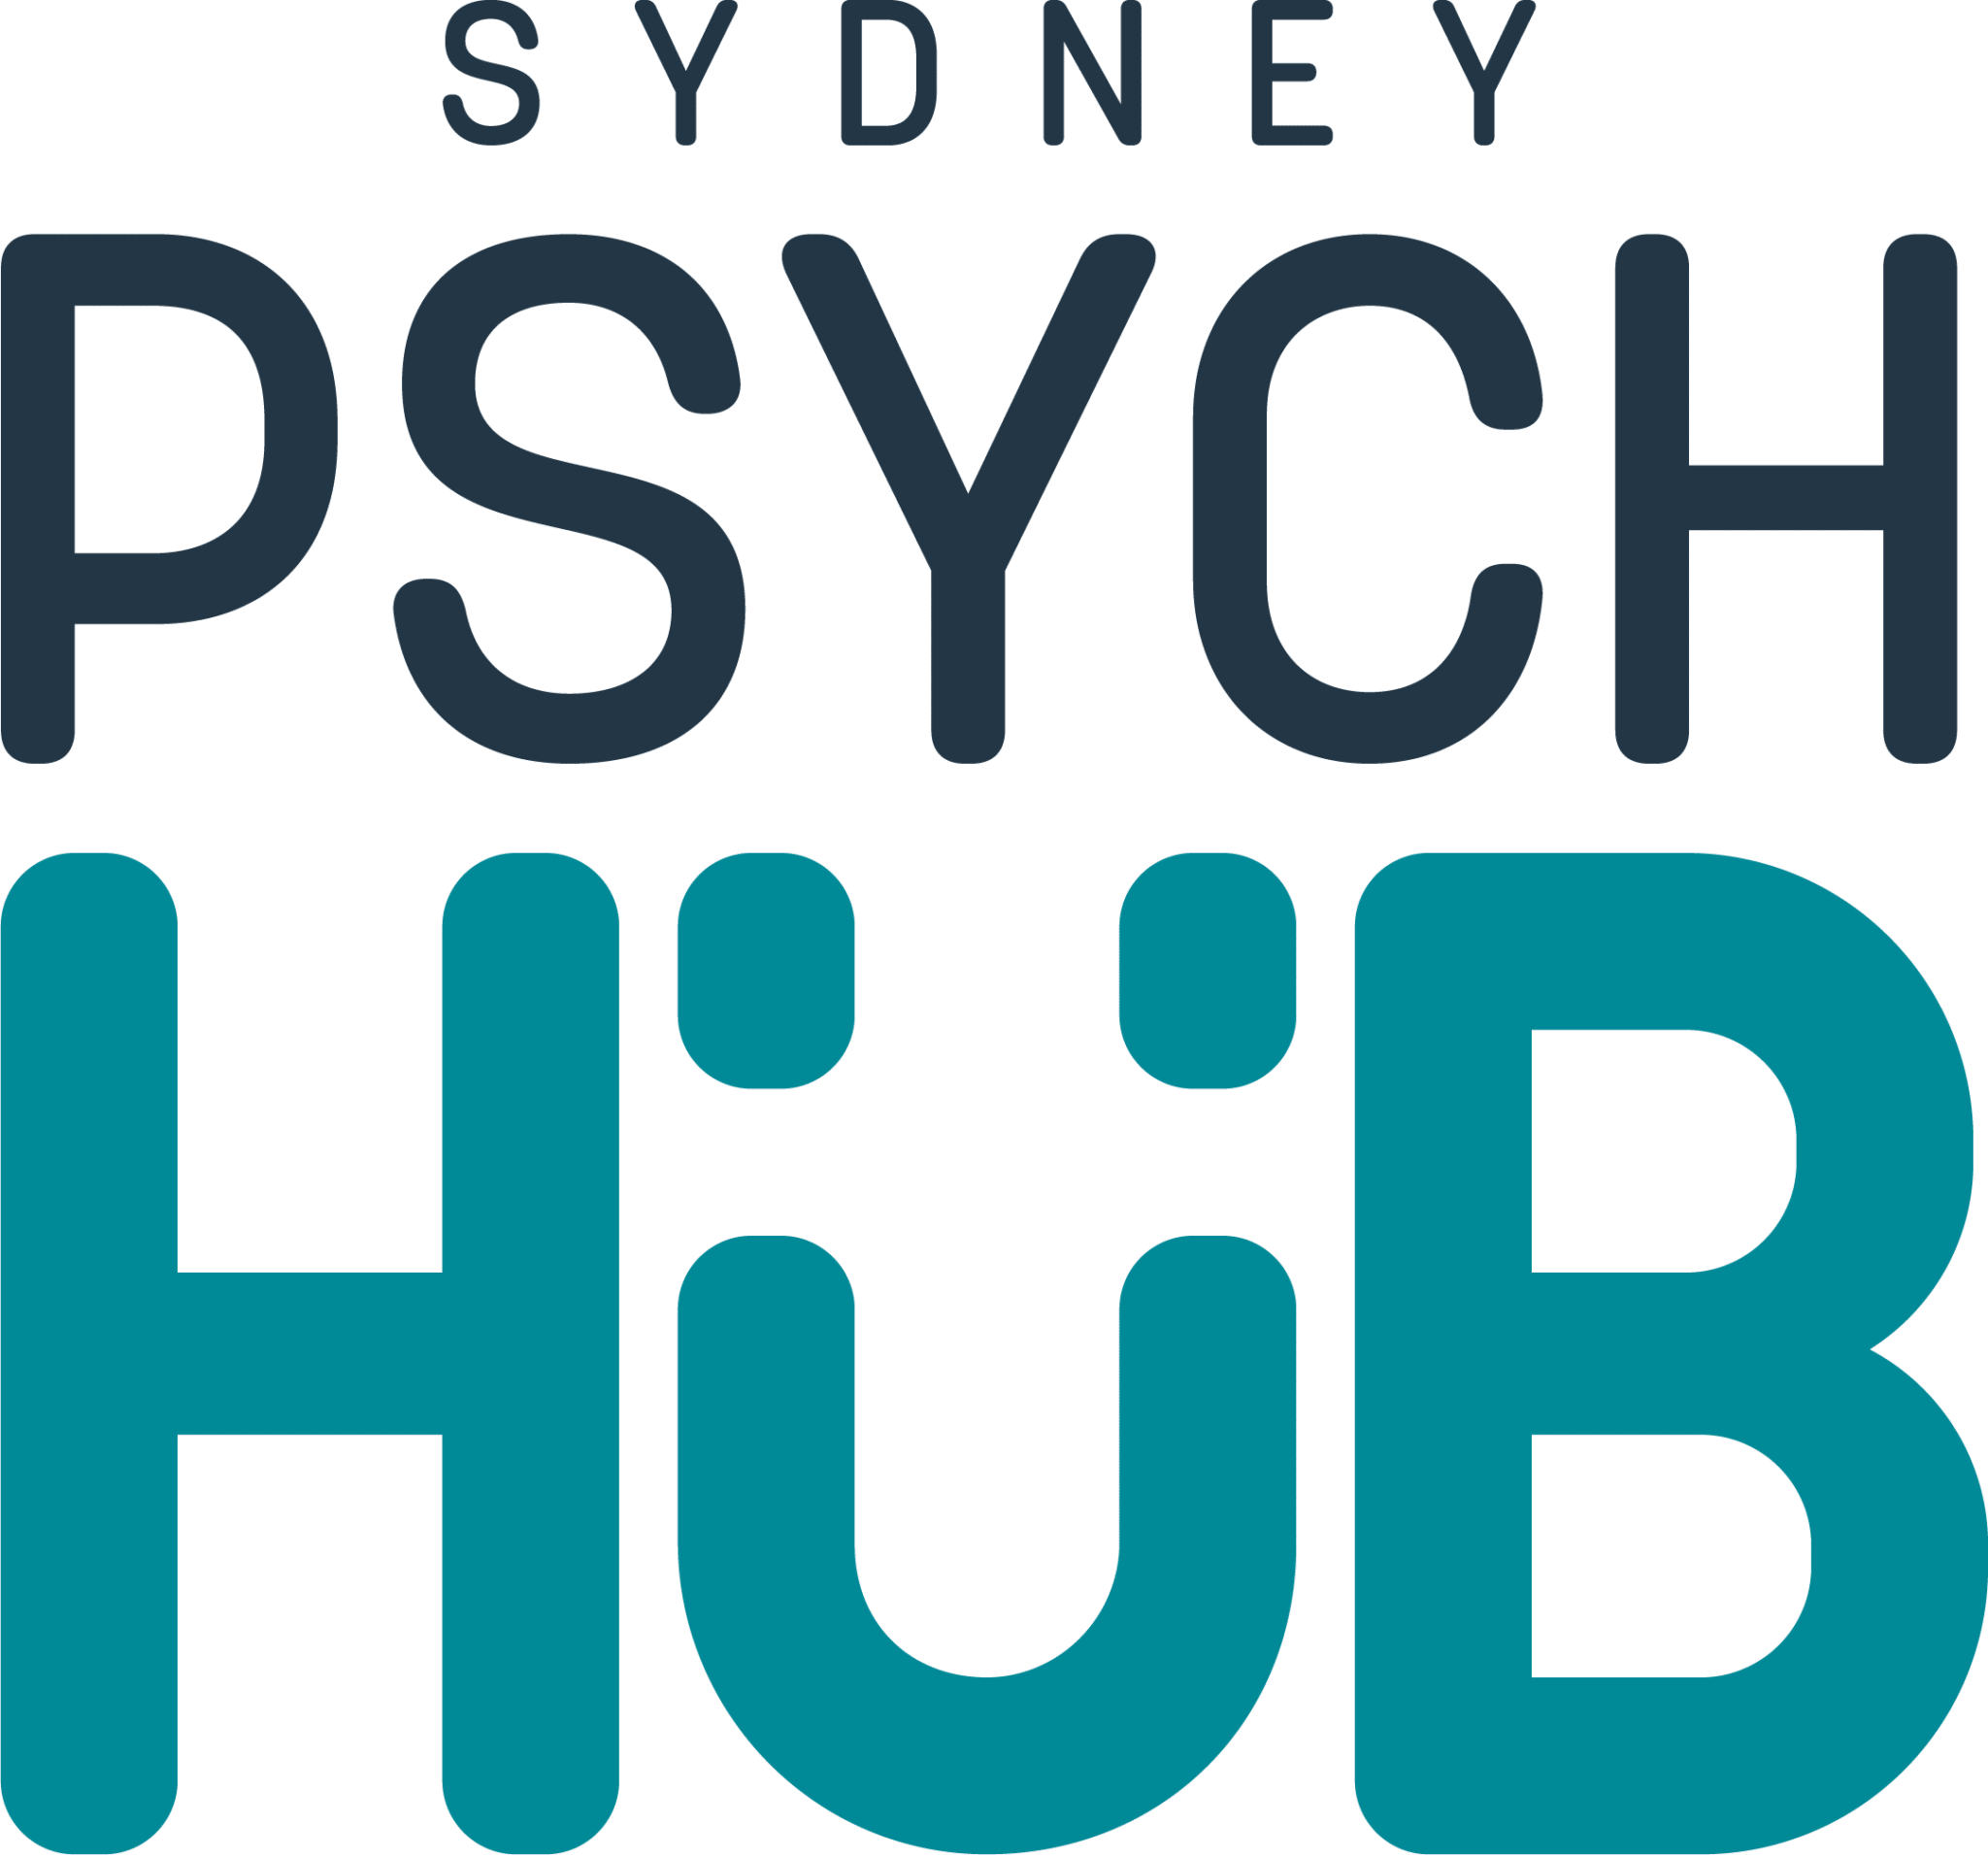 Sydney Psych Hub